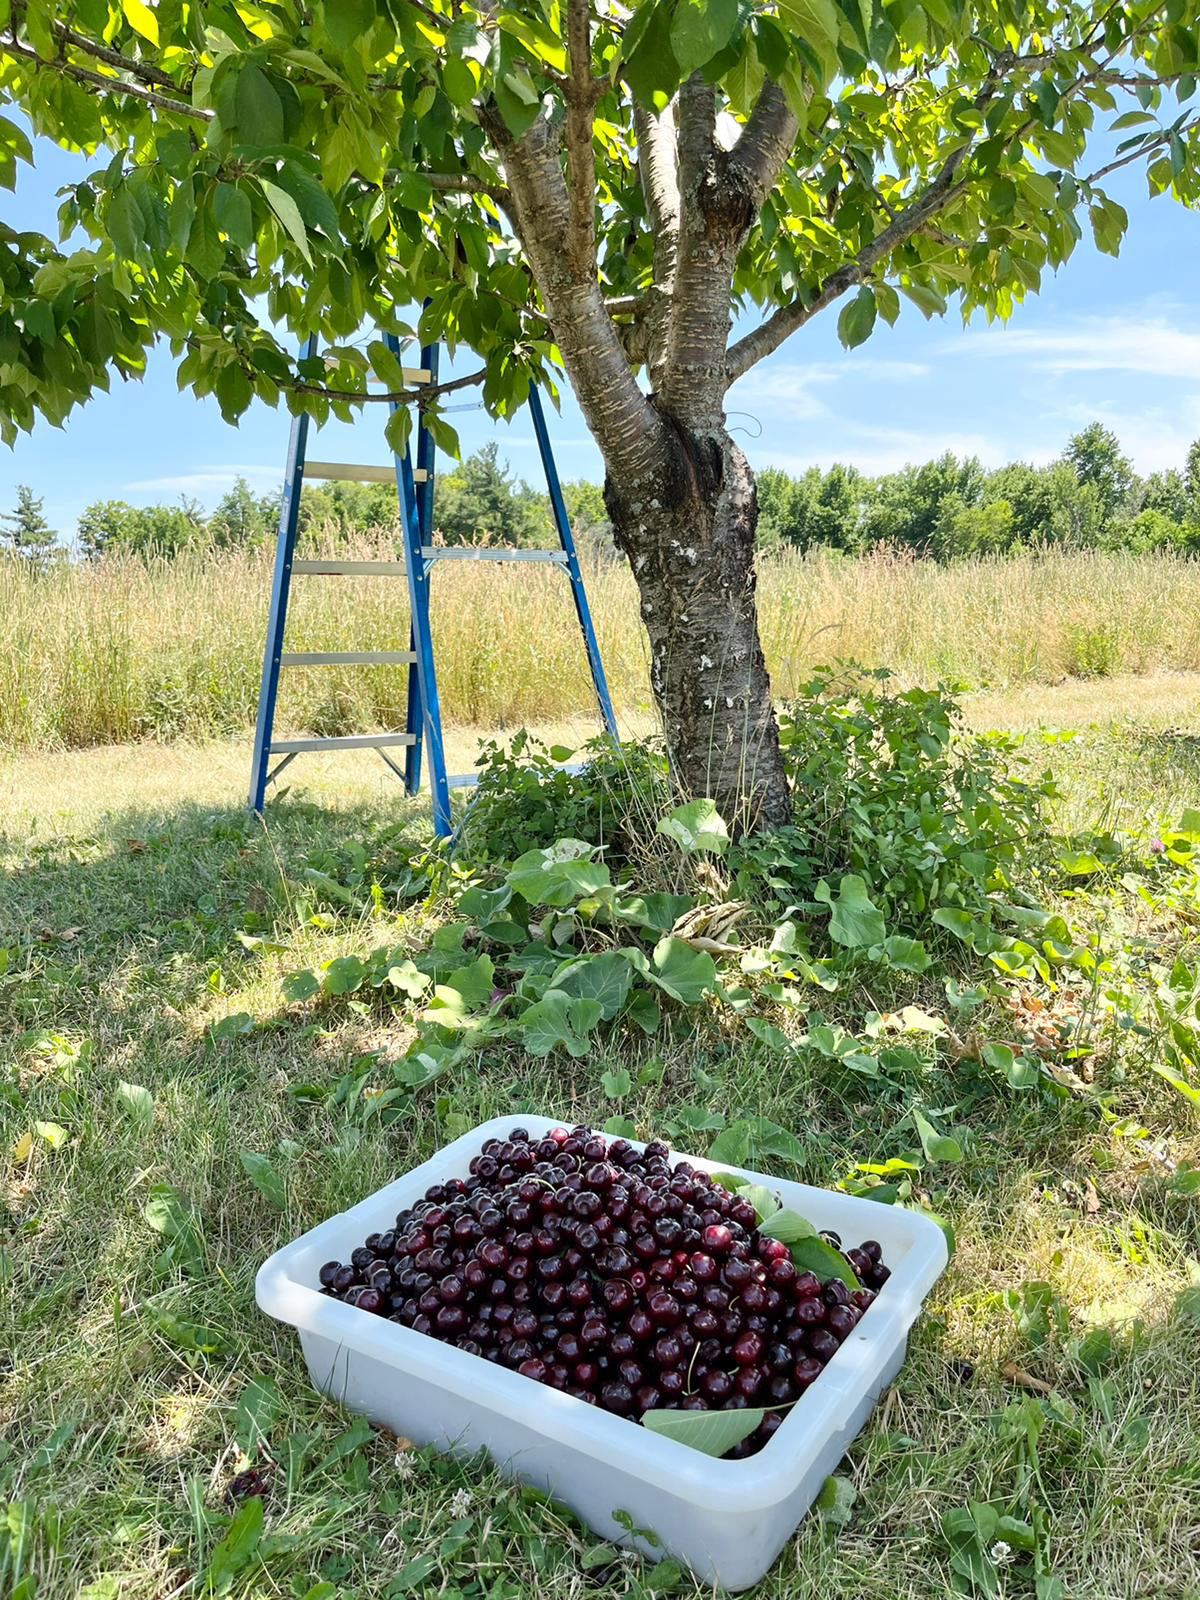 Bin of freshly picked cherries and ladder near cherry tree